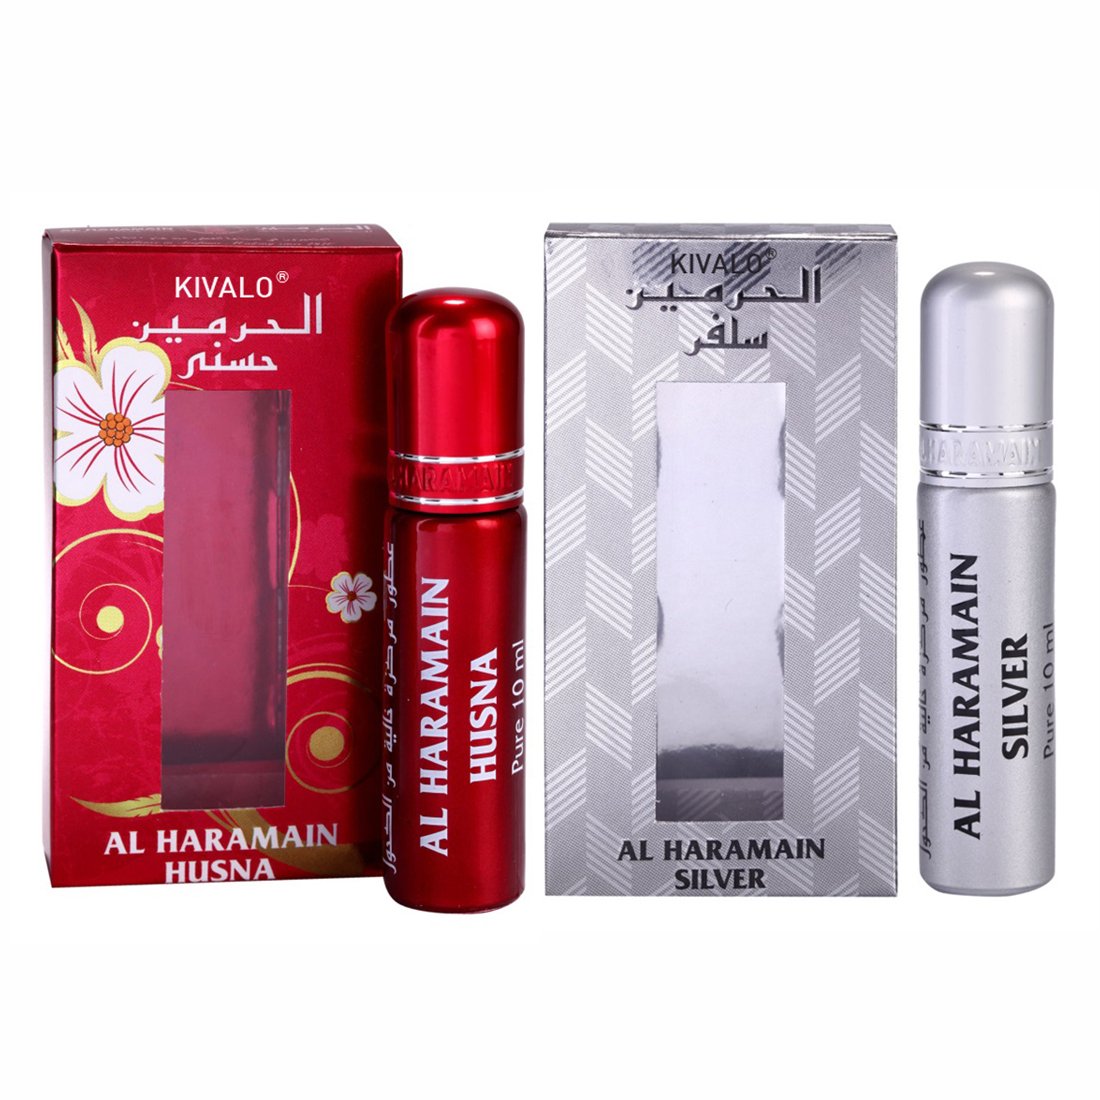 Al Haramain Husana & Silver Fragrance Pure Original Roll On Attar Combo Pack of 2 x 10 ml